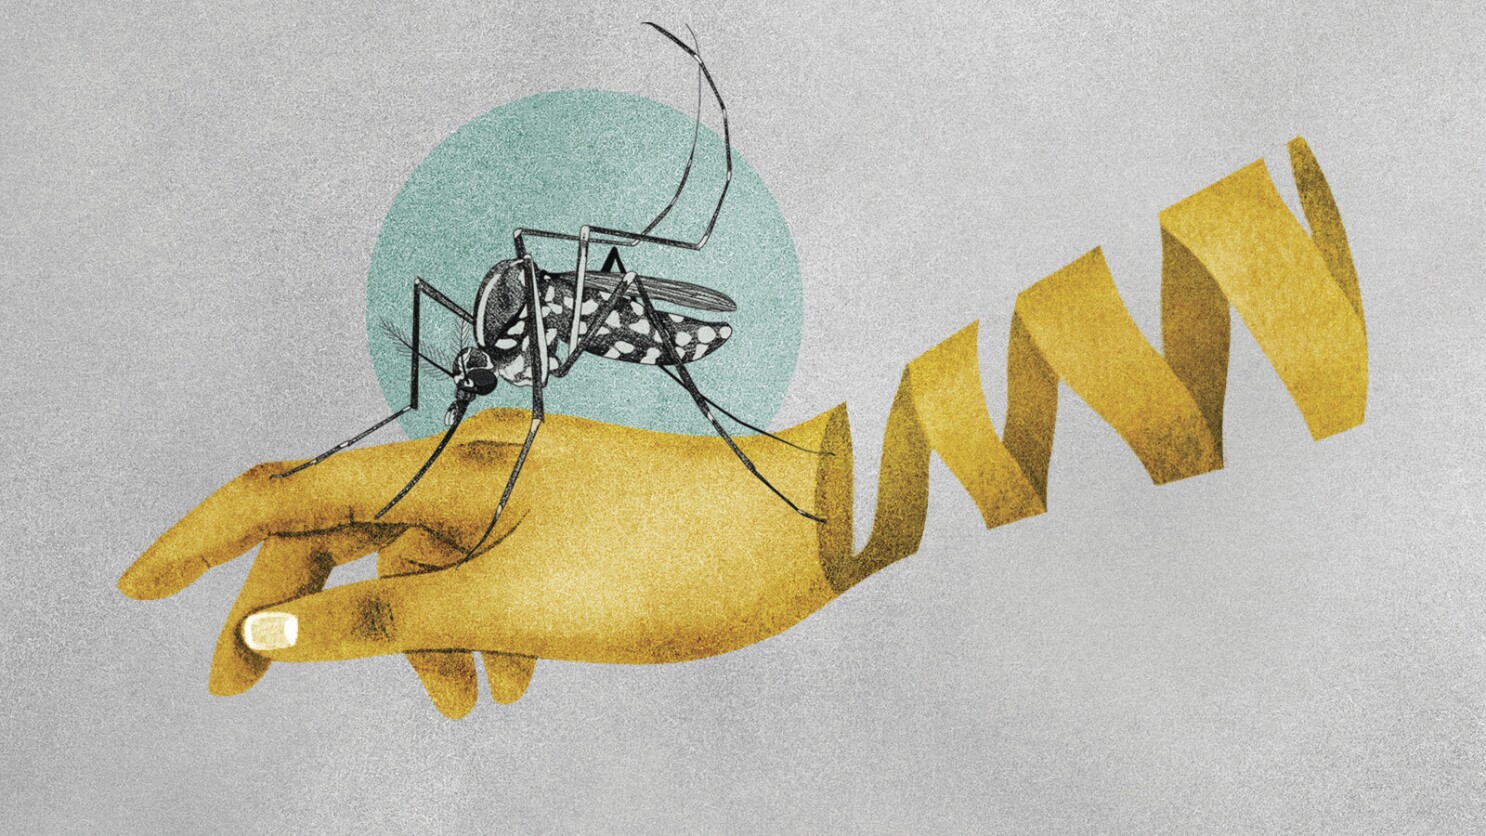 mosquito illustration